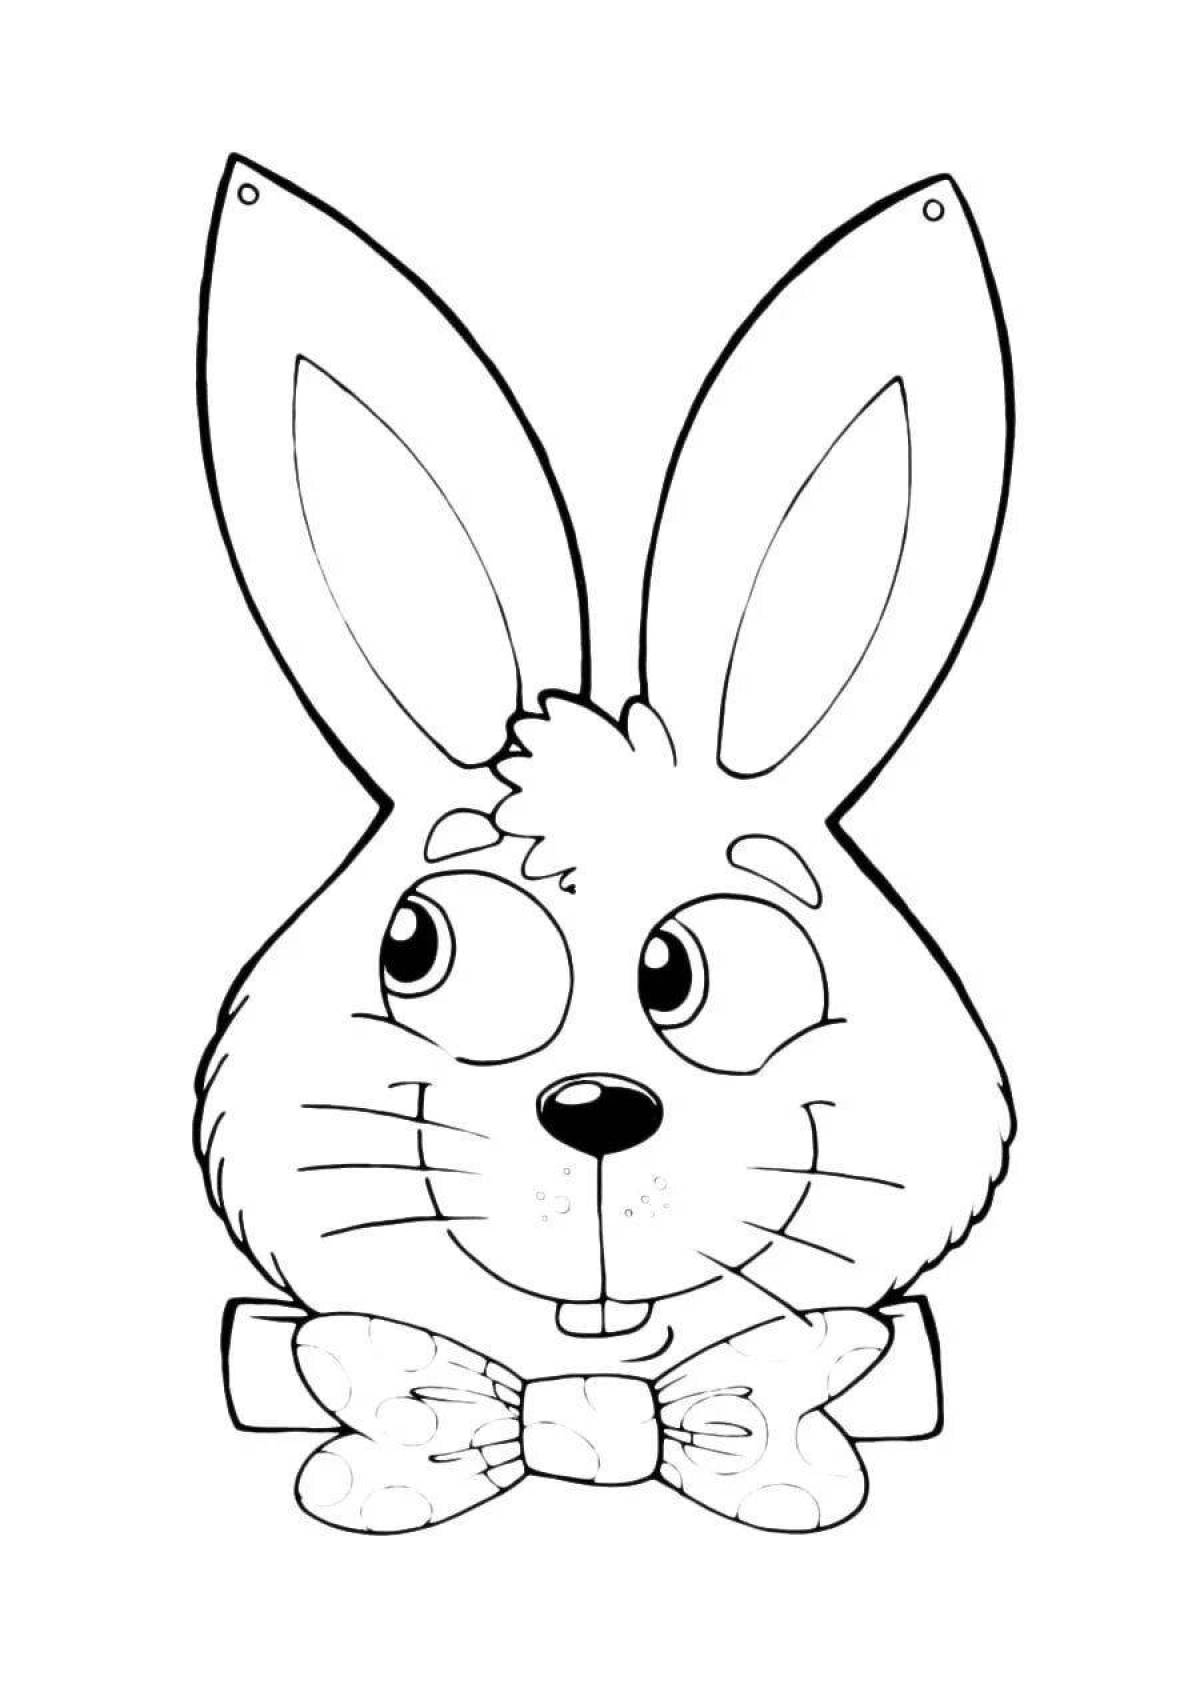 Playful rabbit head coloring book